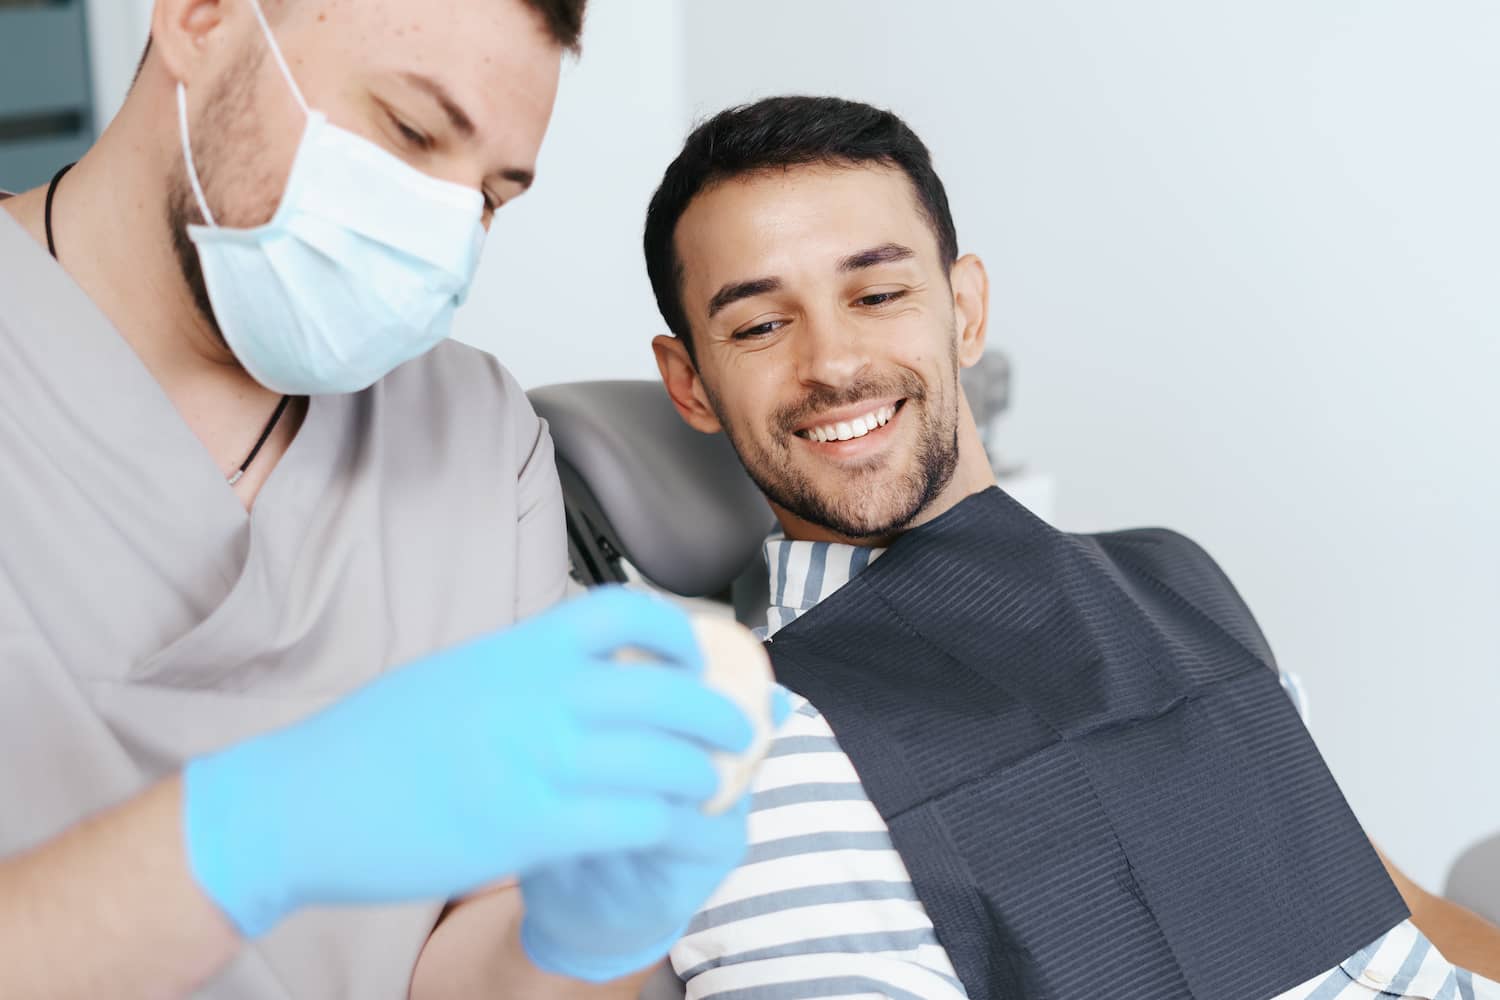 Dentist showing patient new dentures.